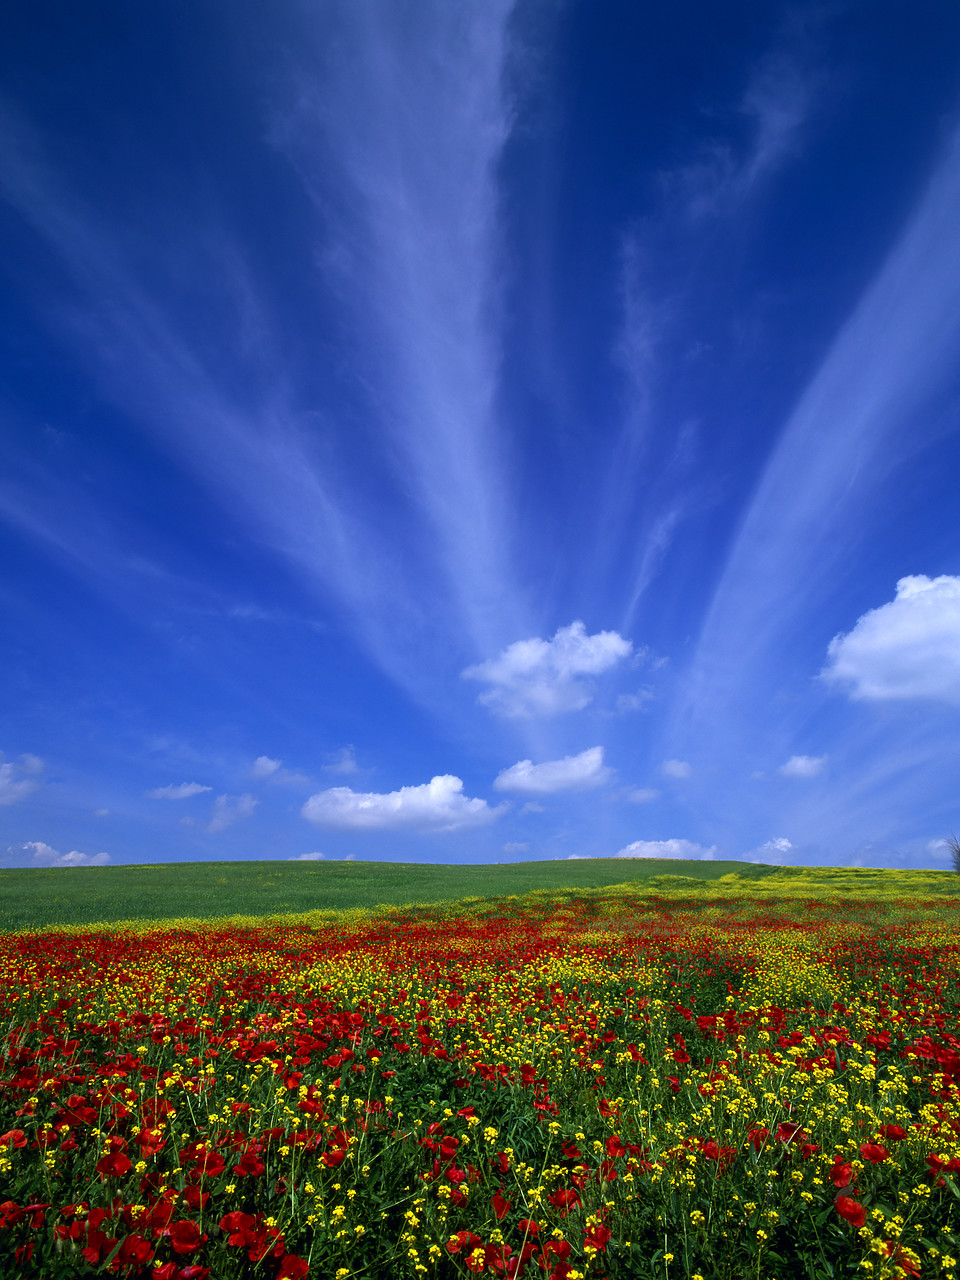 #020114-2 - Field of Wildflowers & Cloudscape, near Pienza, Tuscany, Italy